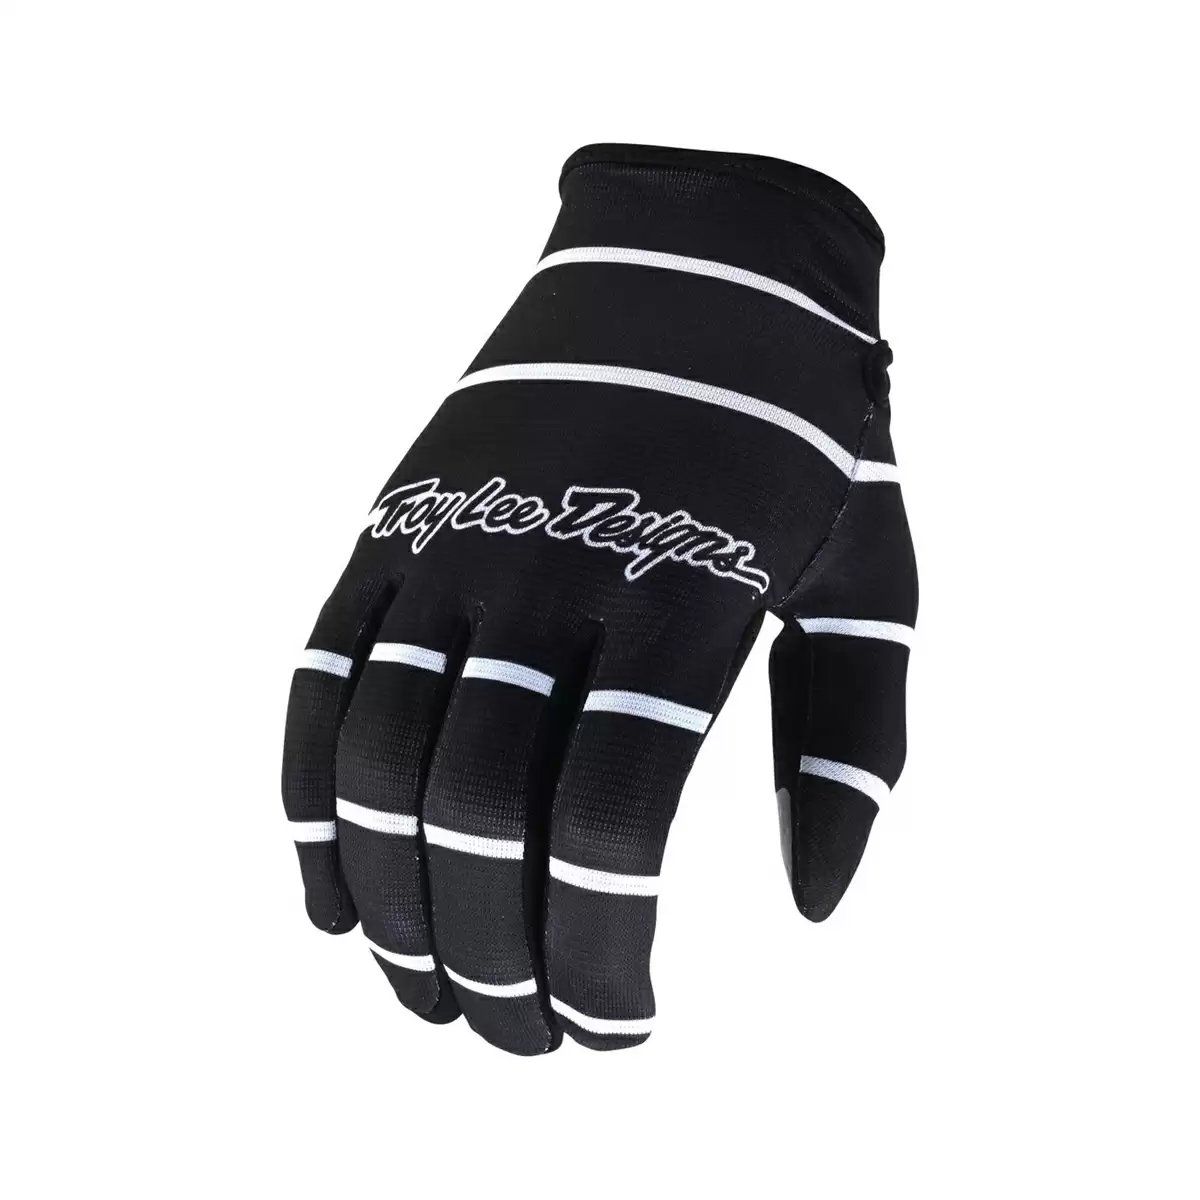 Gloves Flowline Stripe Black Size S - image